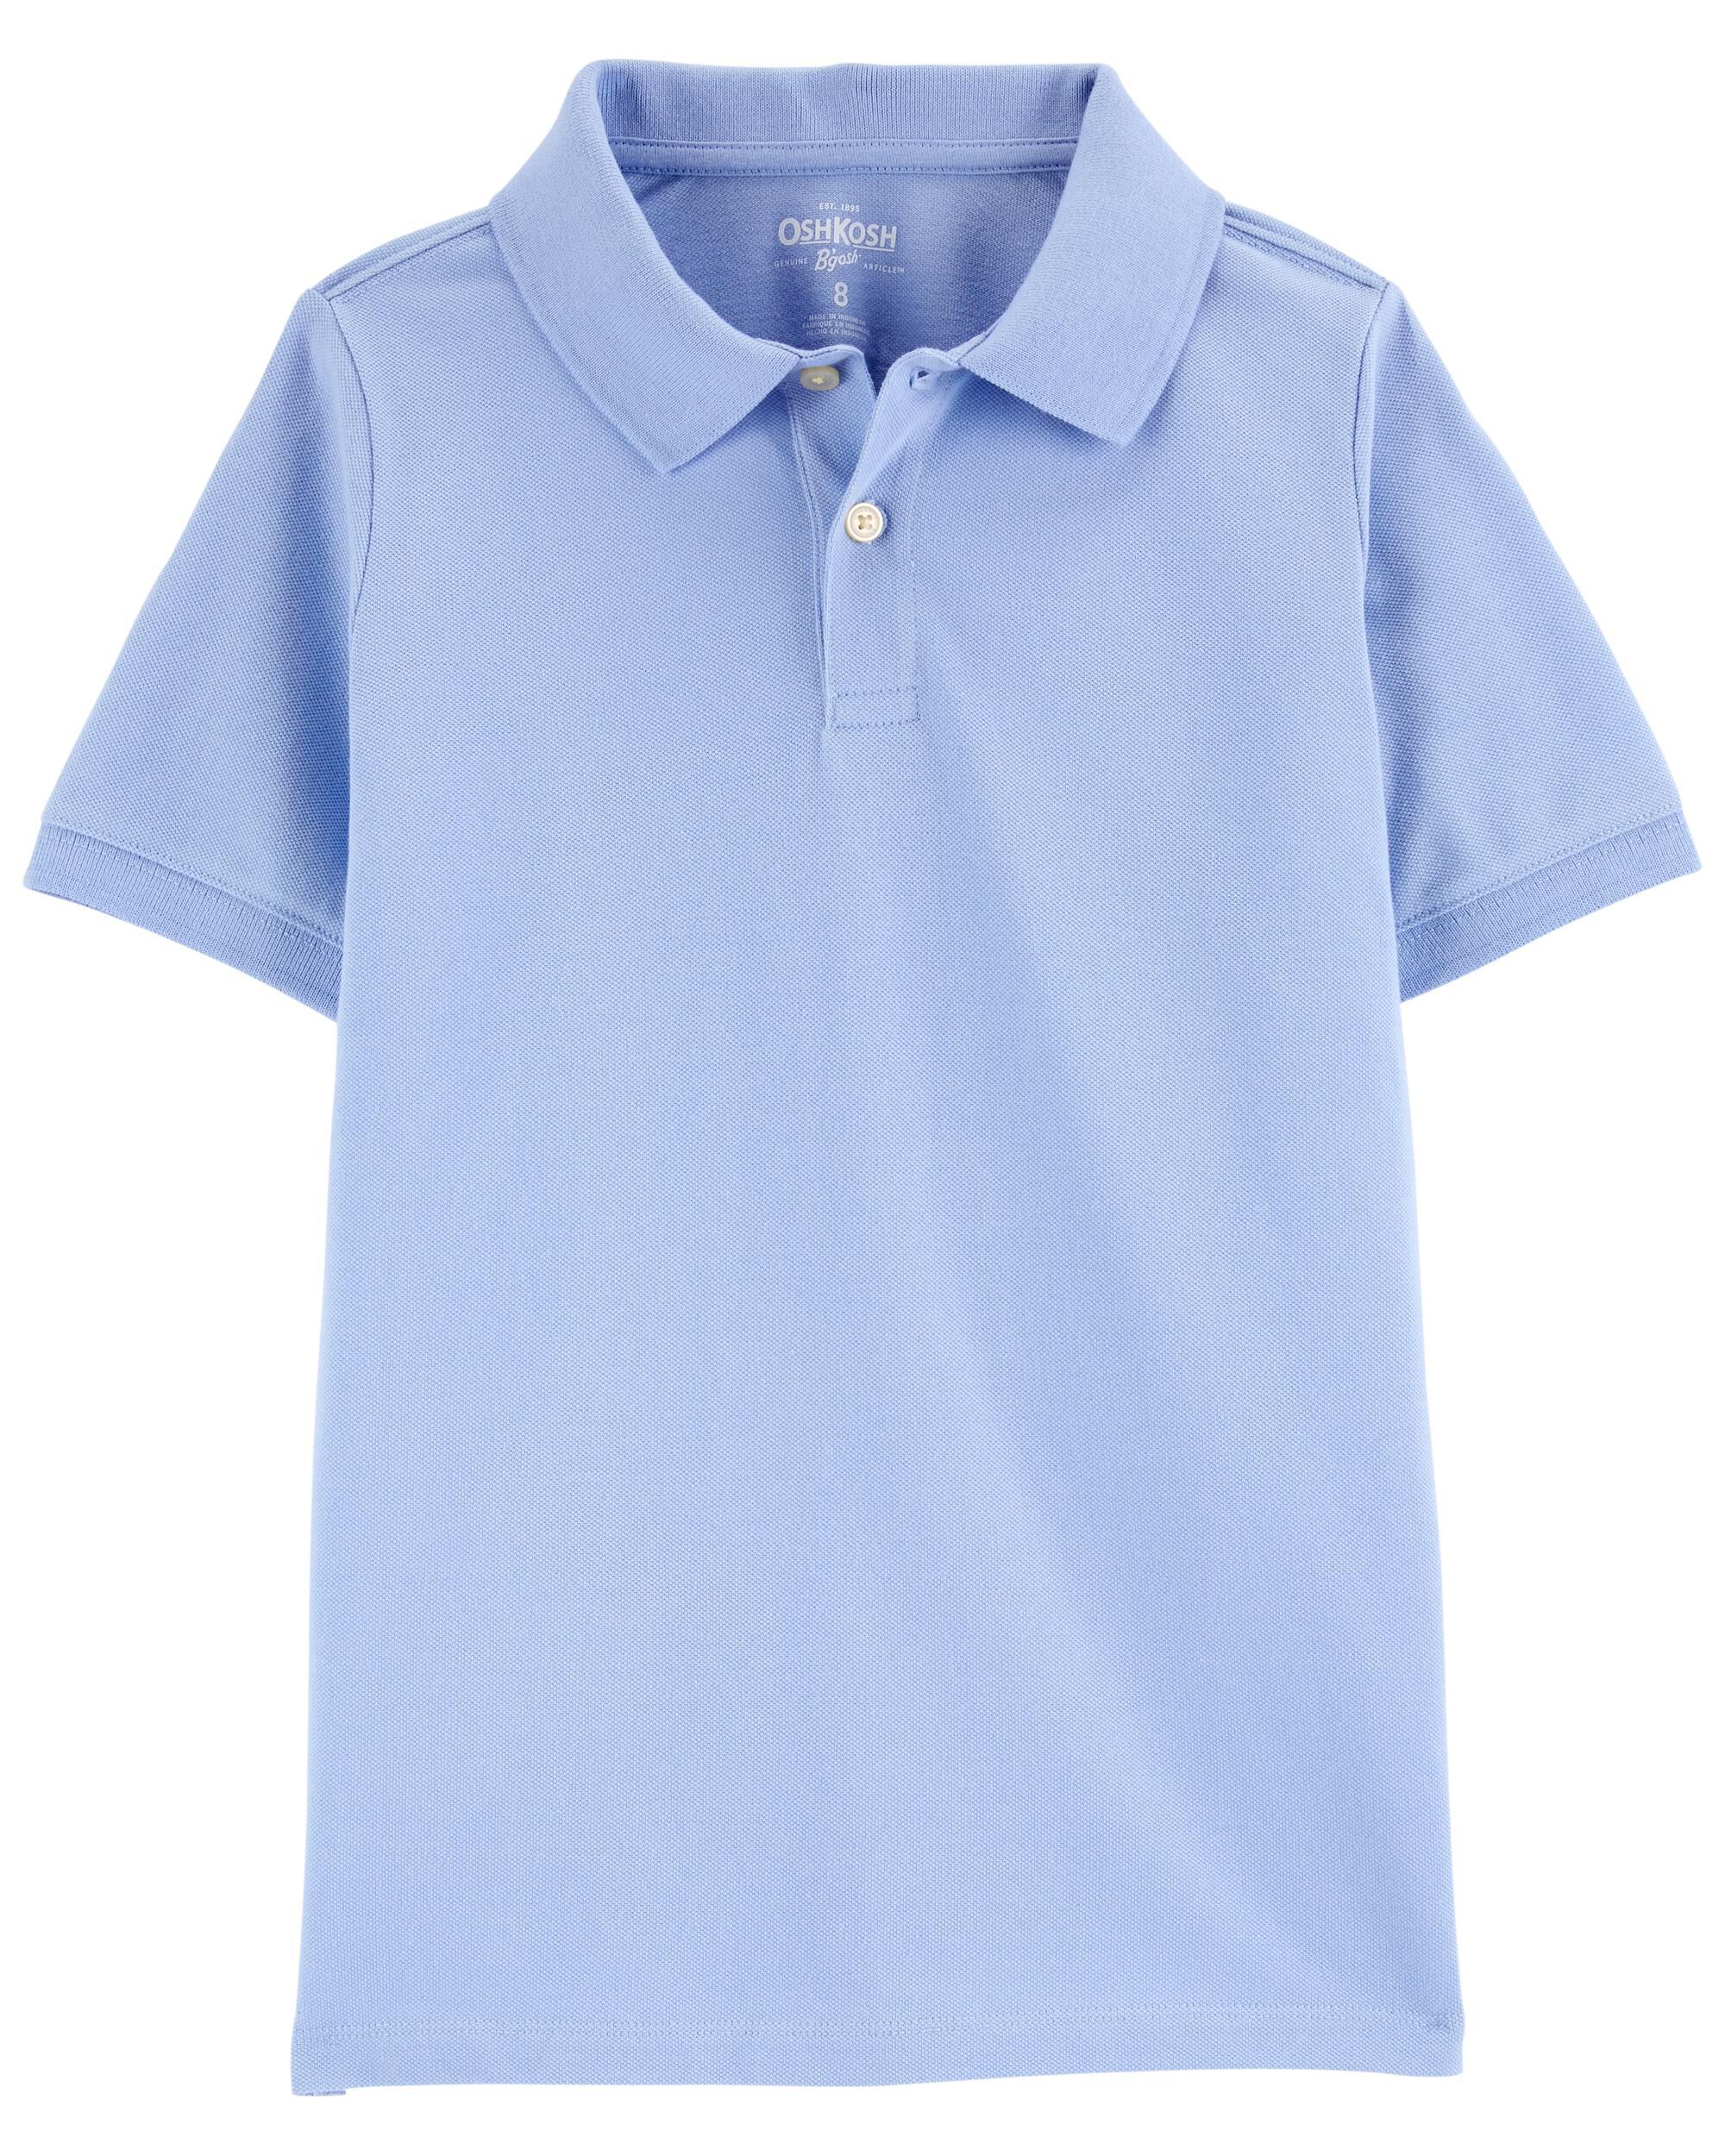 OSHKOSH B'GOSH Boys Short Sleeve Button-Front Shirt Blue w/ Cool Pineapples NWT